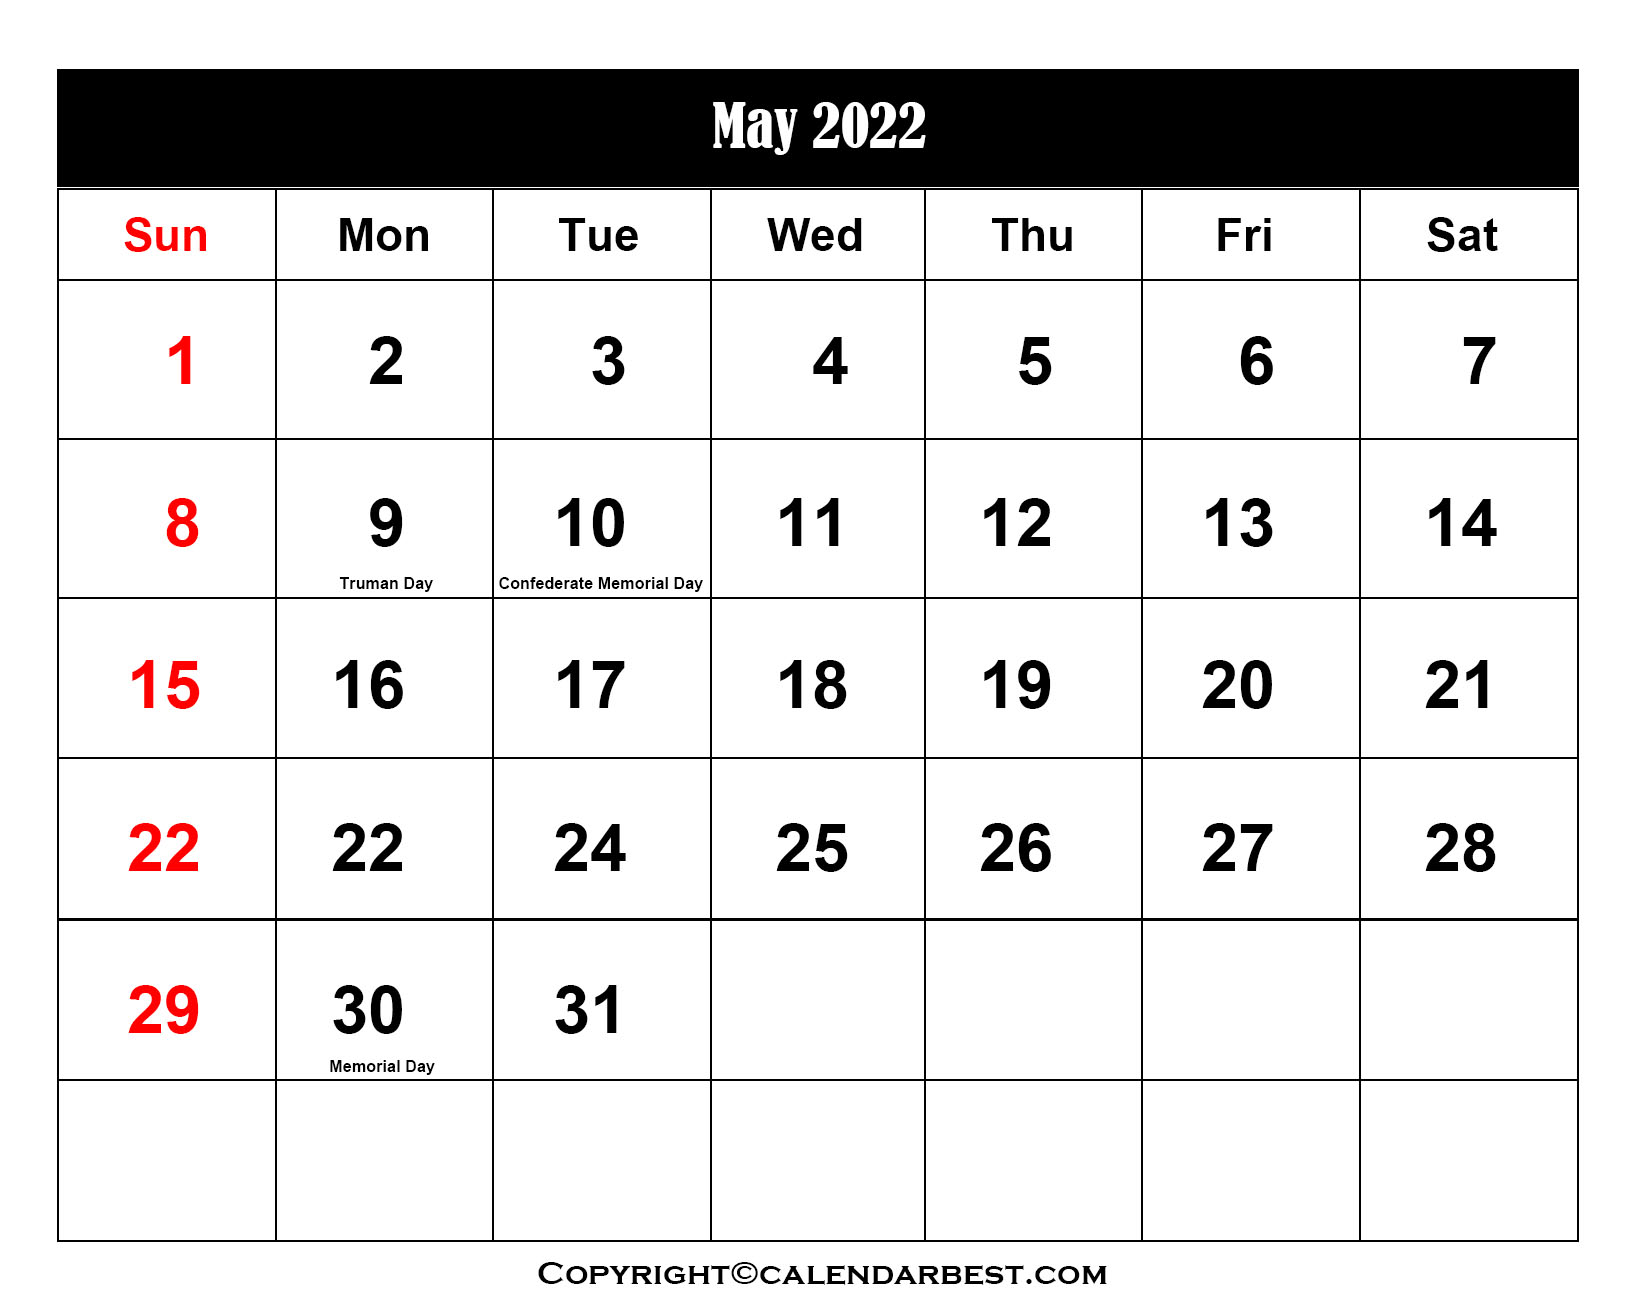 free-may-2022-calendar-with-holidays-printable-free-printable-may-2022-calendar-with-holidays